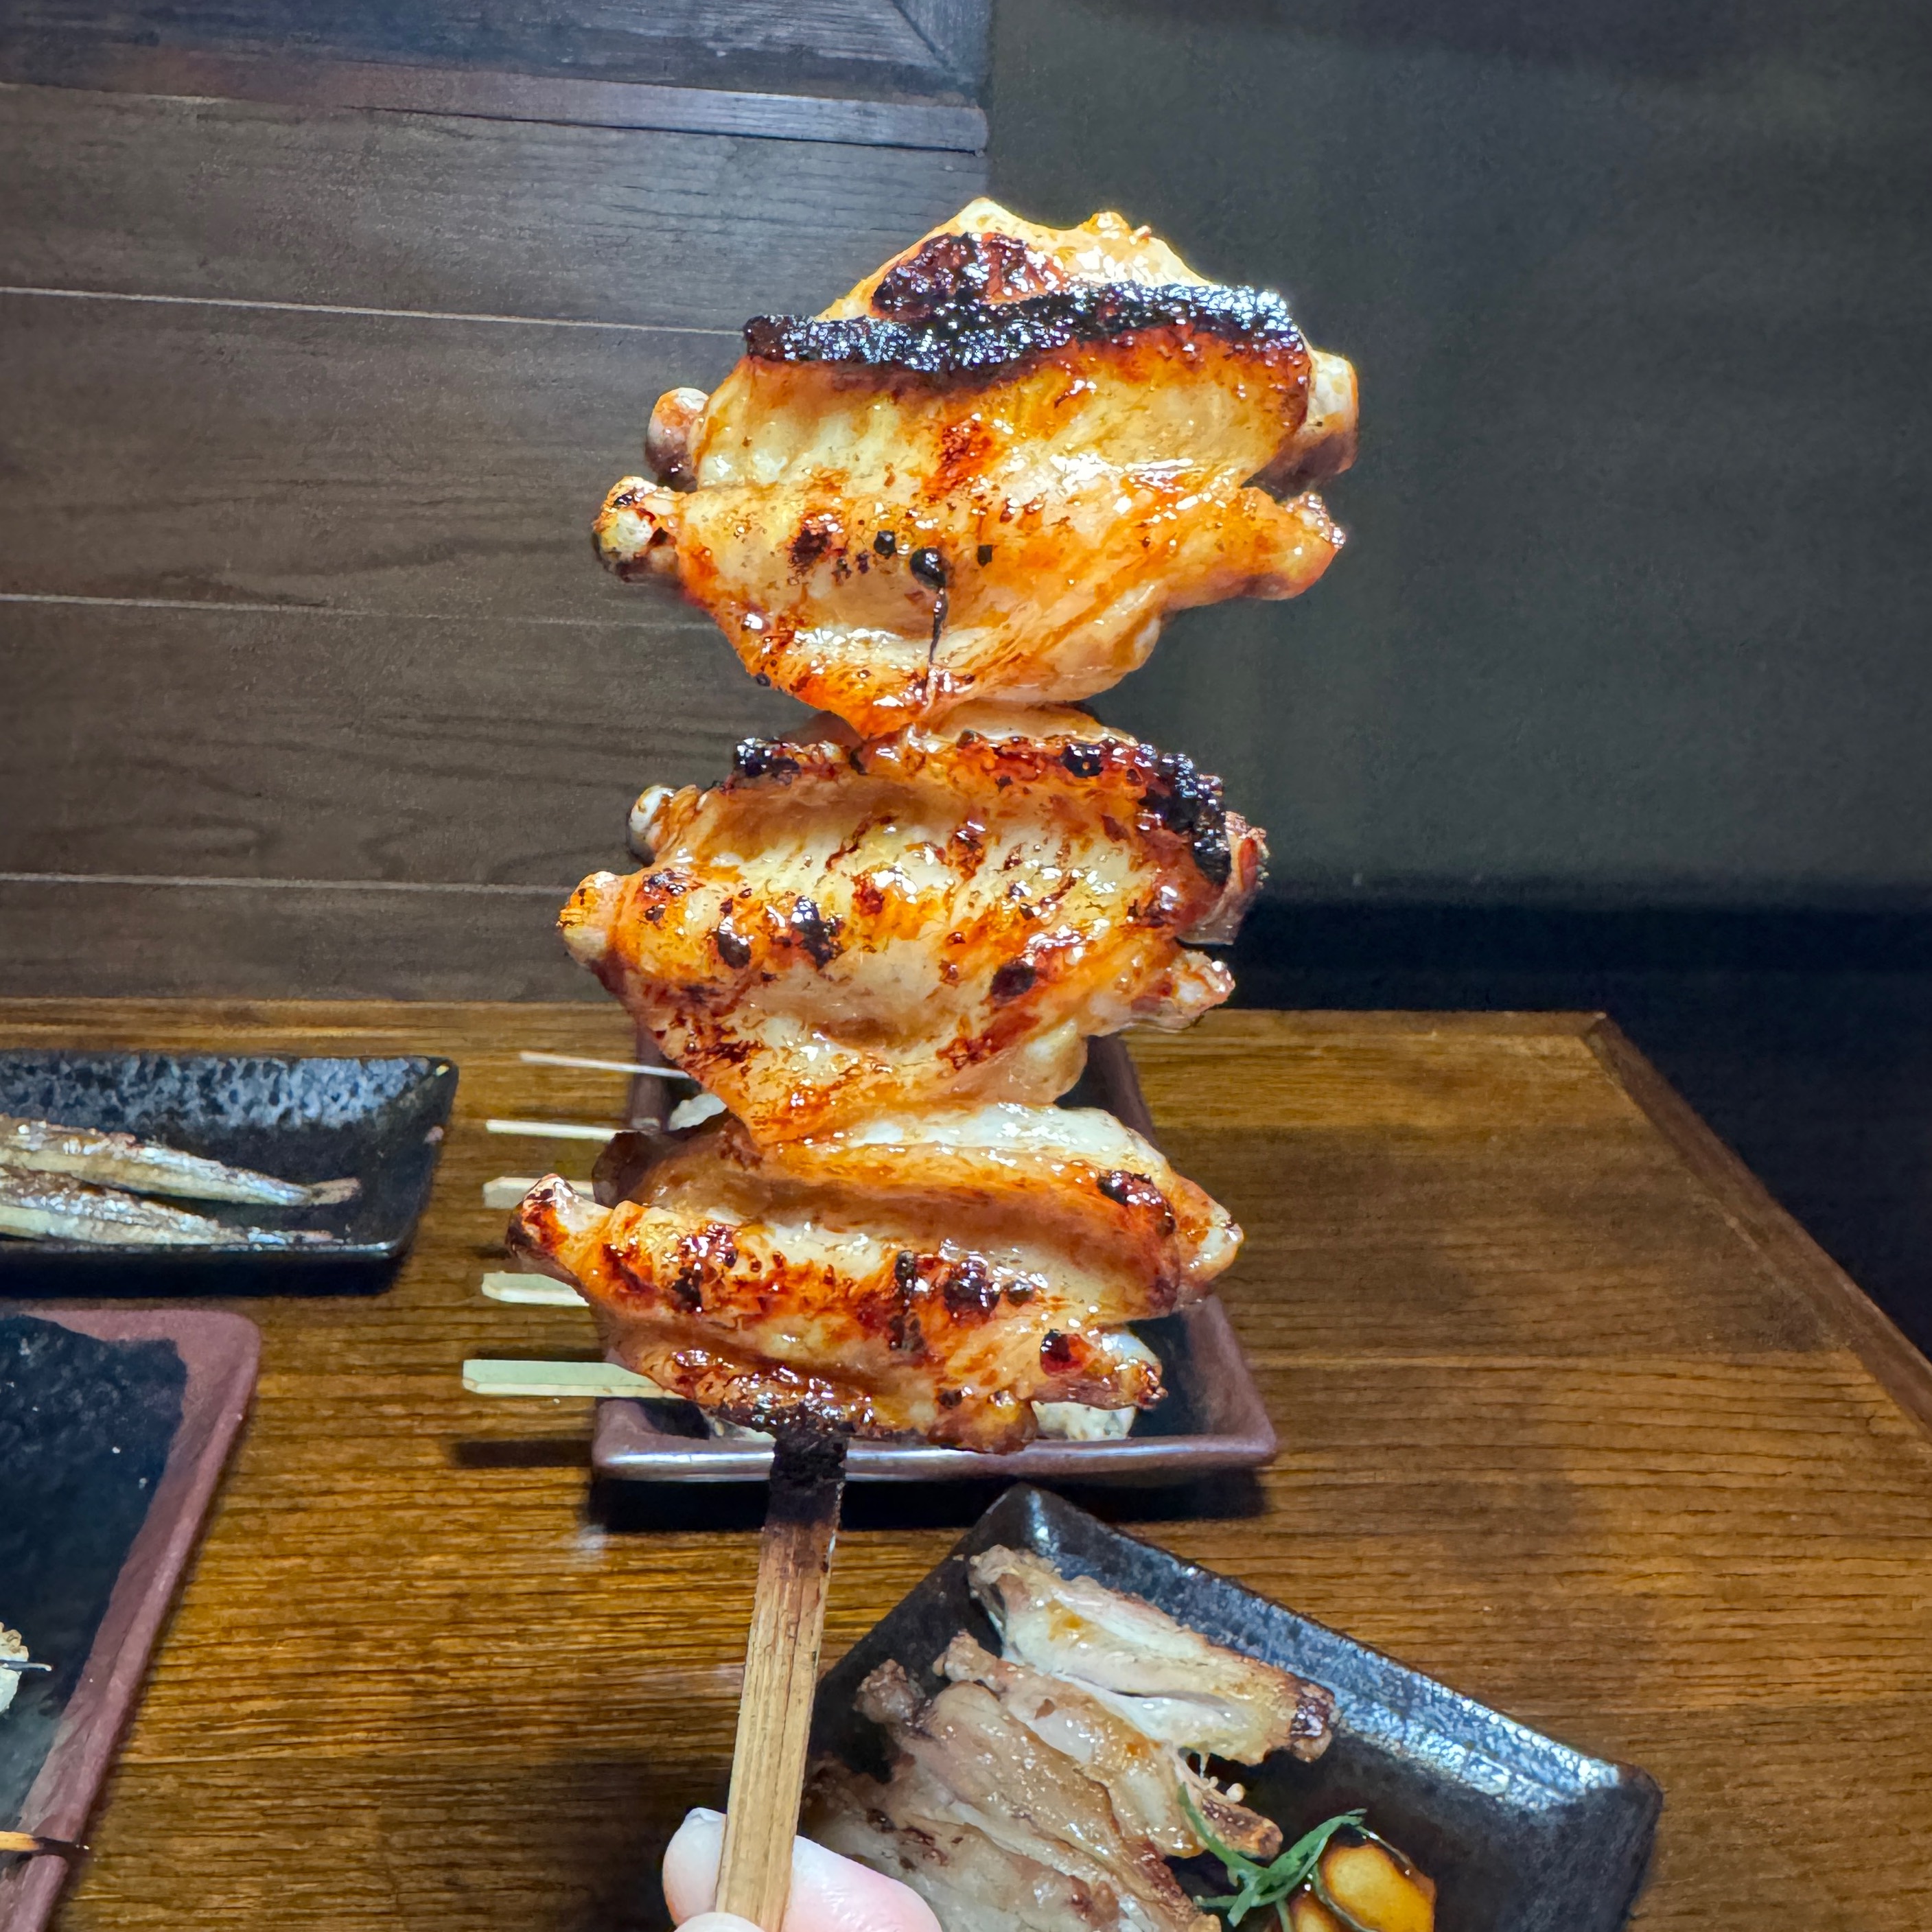 Spicy Chicken Wings $4.50 from Yakitori Koshiji on #foodmento http://foodmento.com/dish/57616